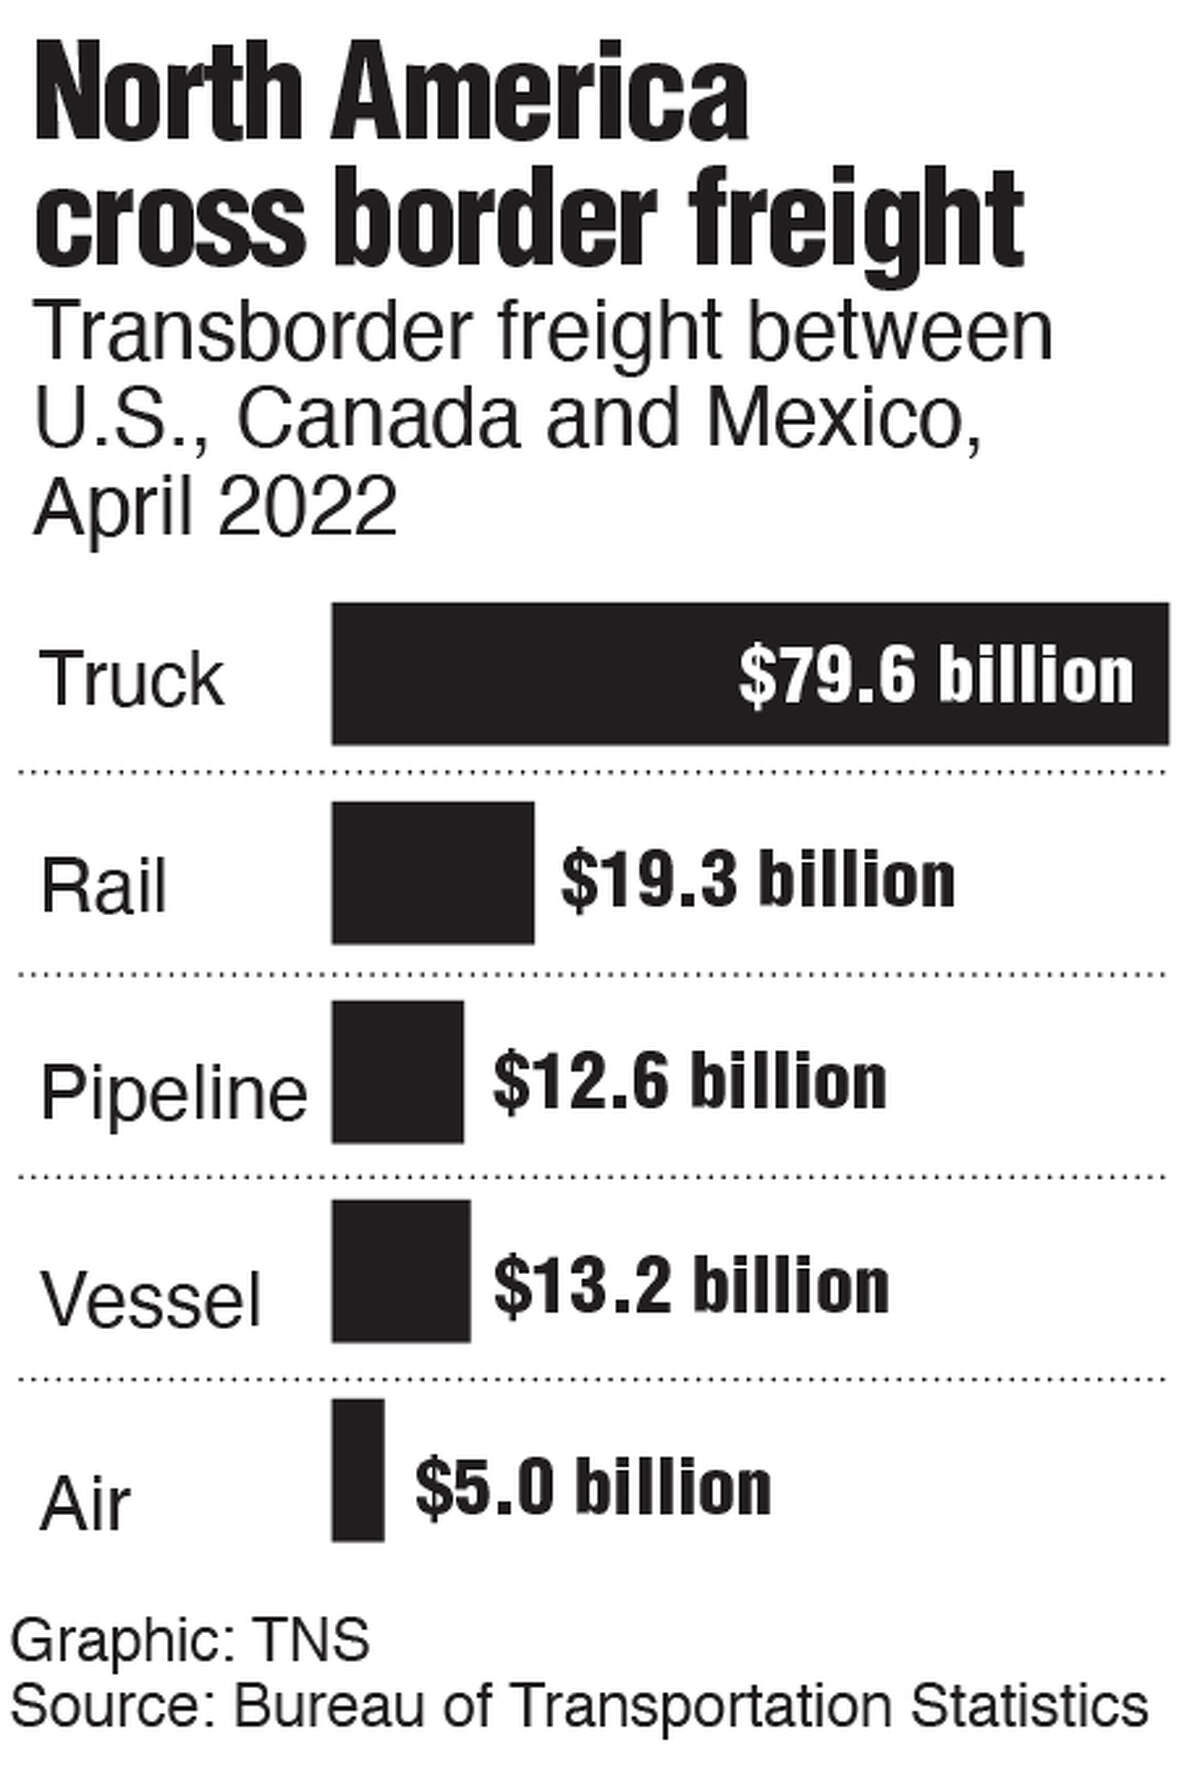 North American transborder freight.